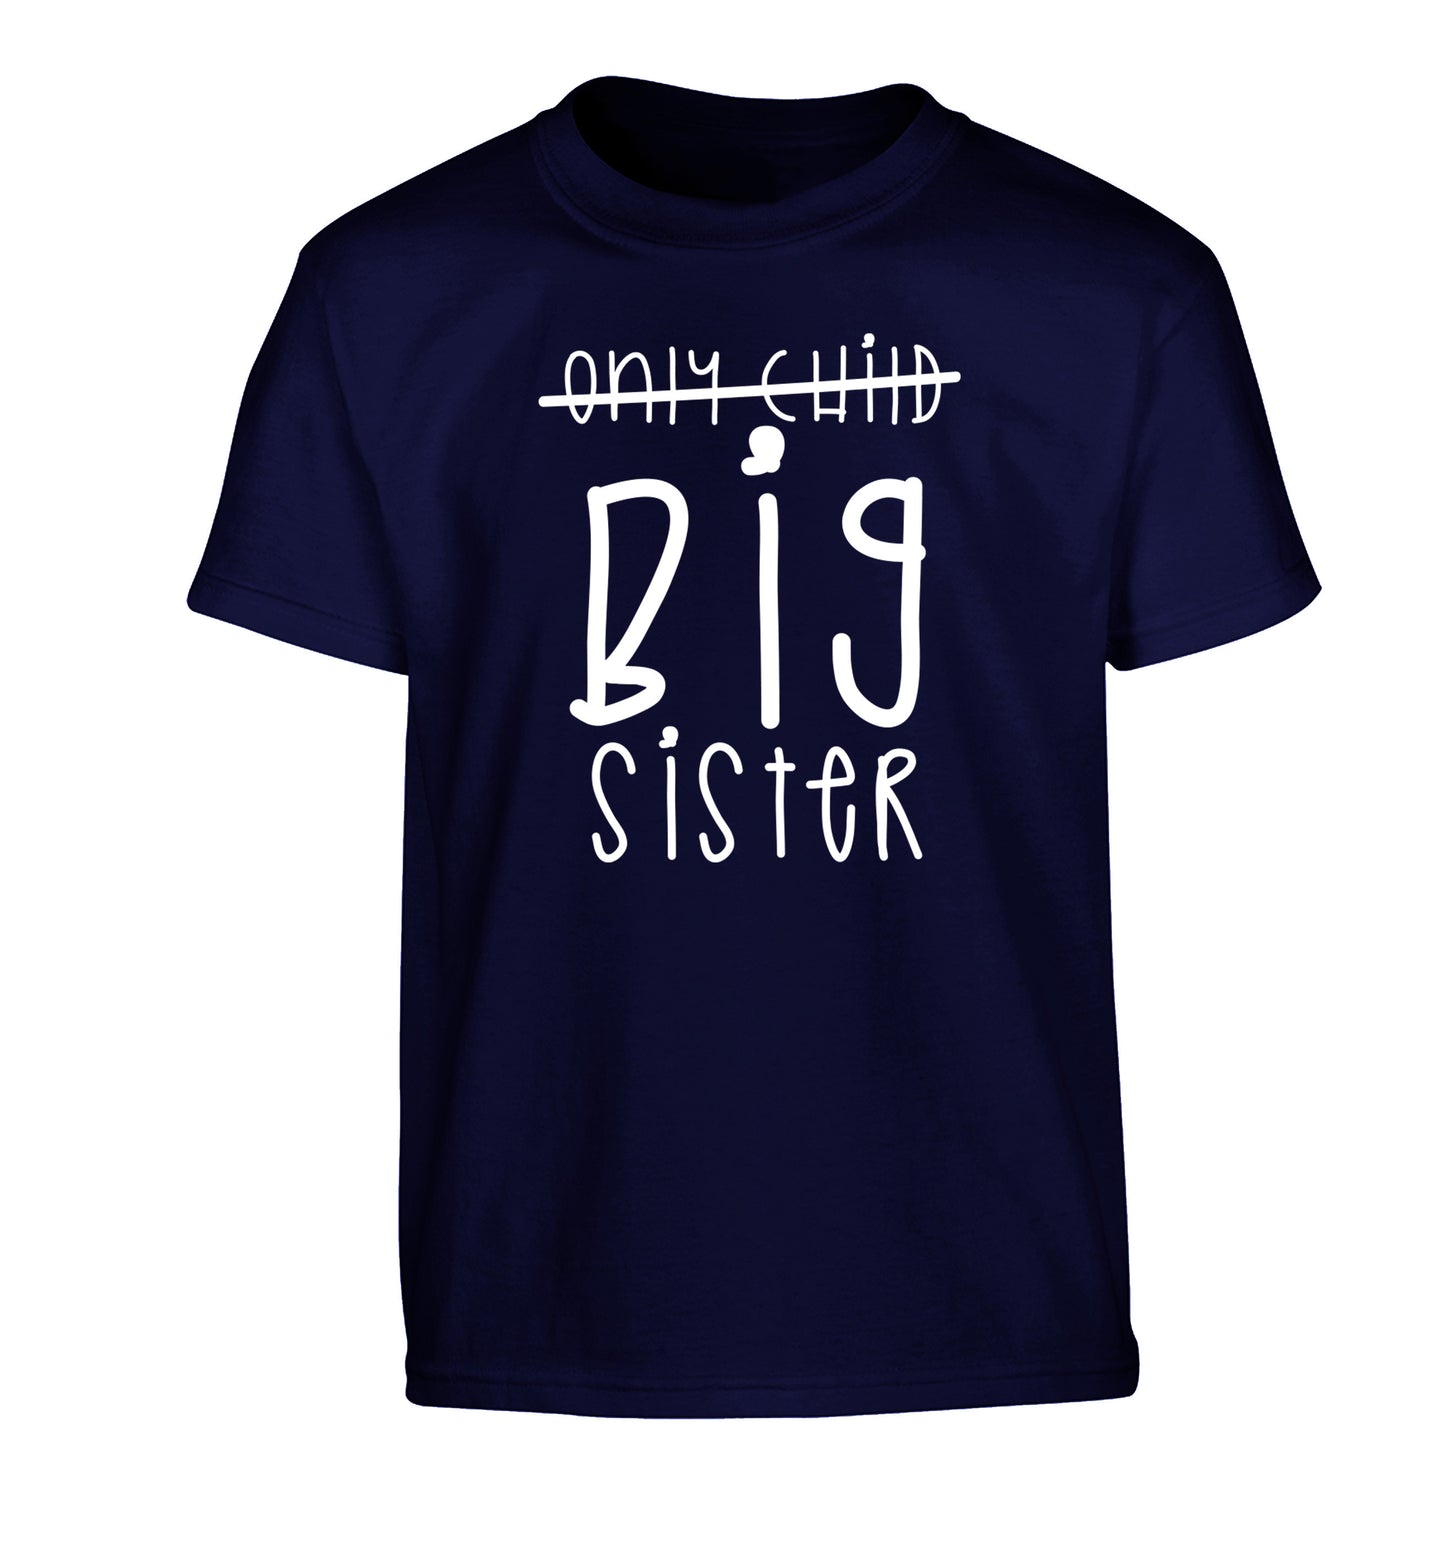 Only child big sister Children's navy Tshirt 12-14 Years